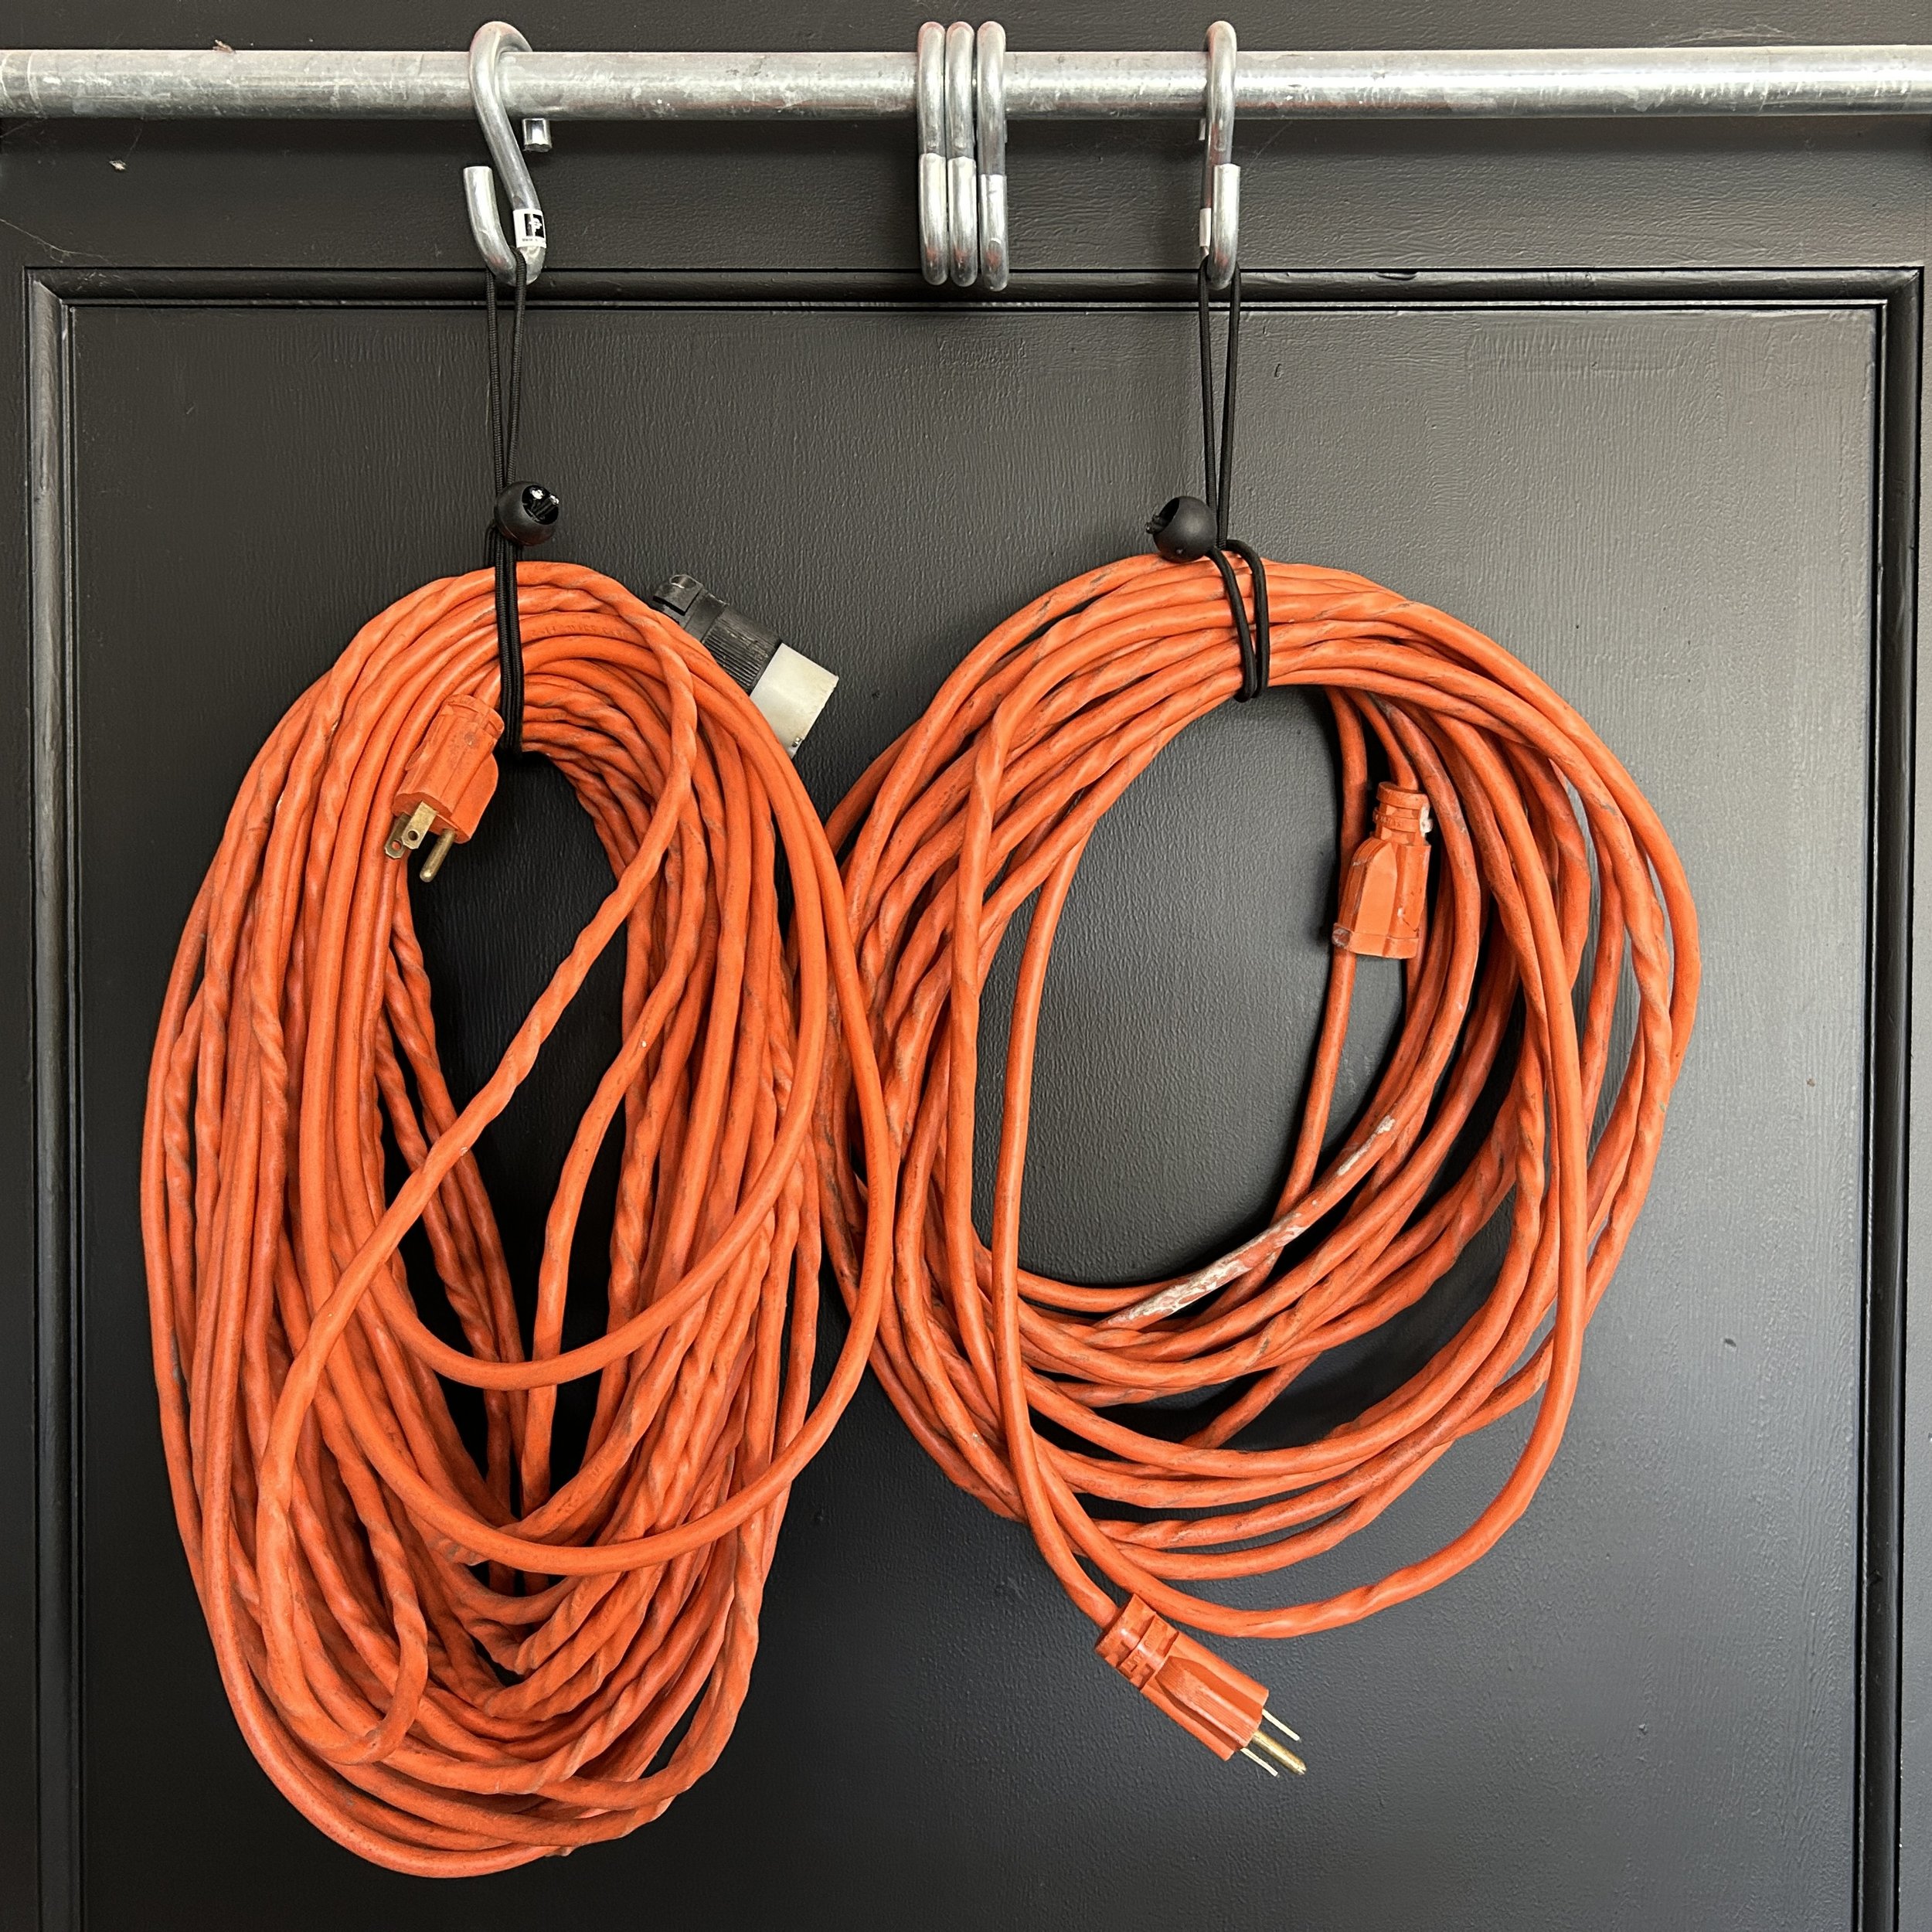 Extension cord storage